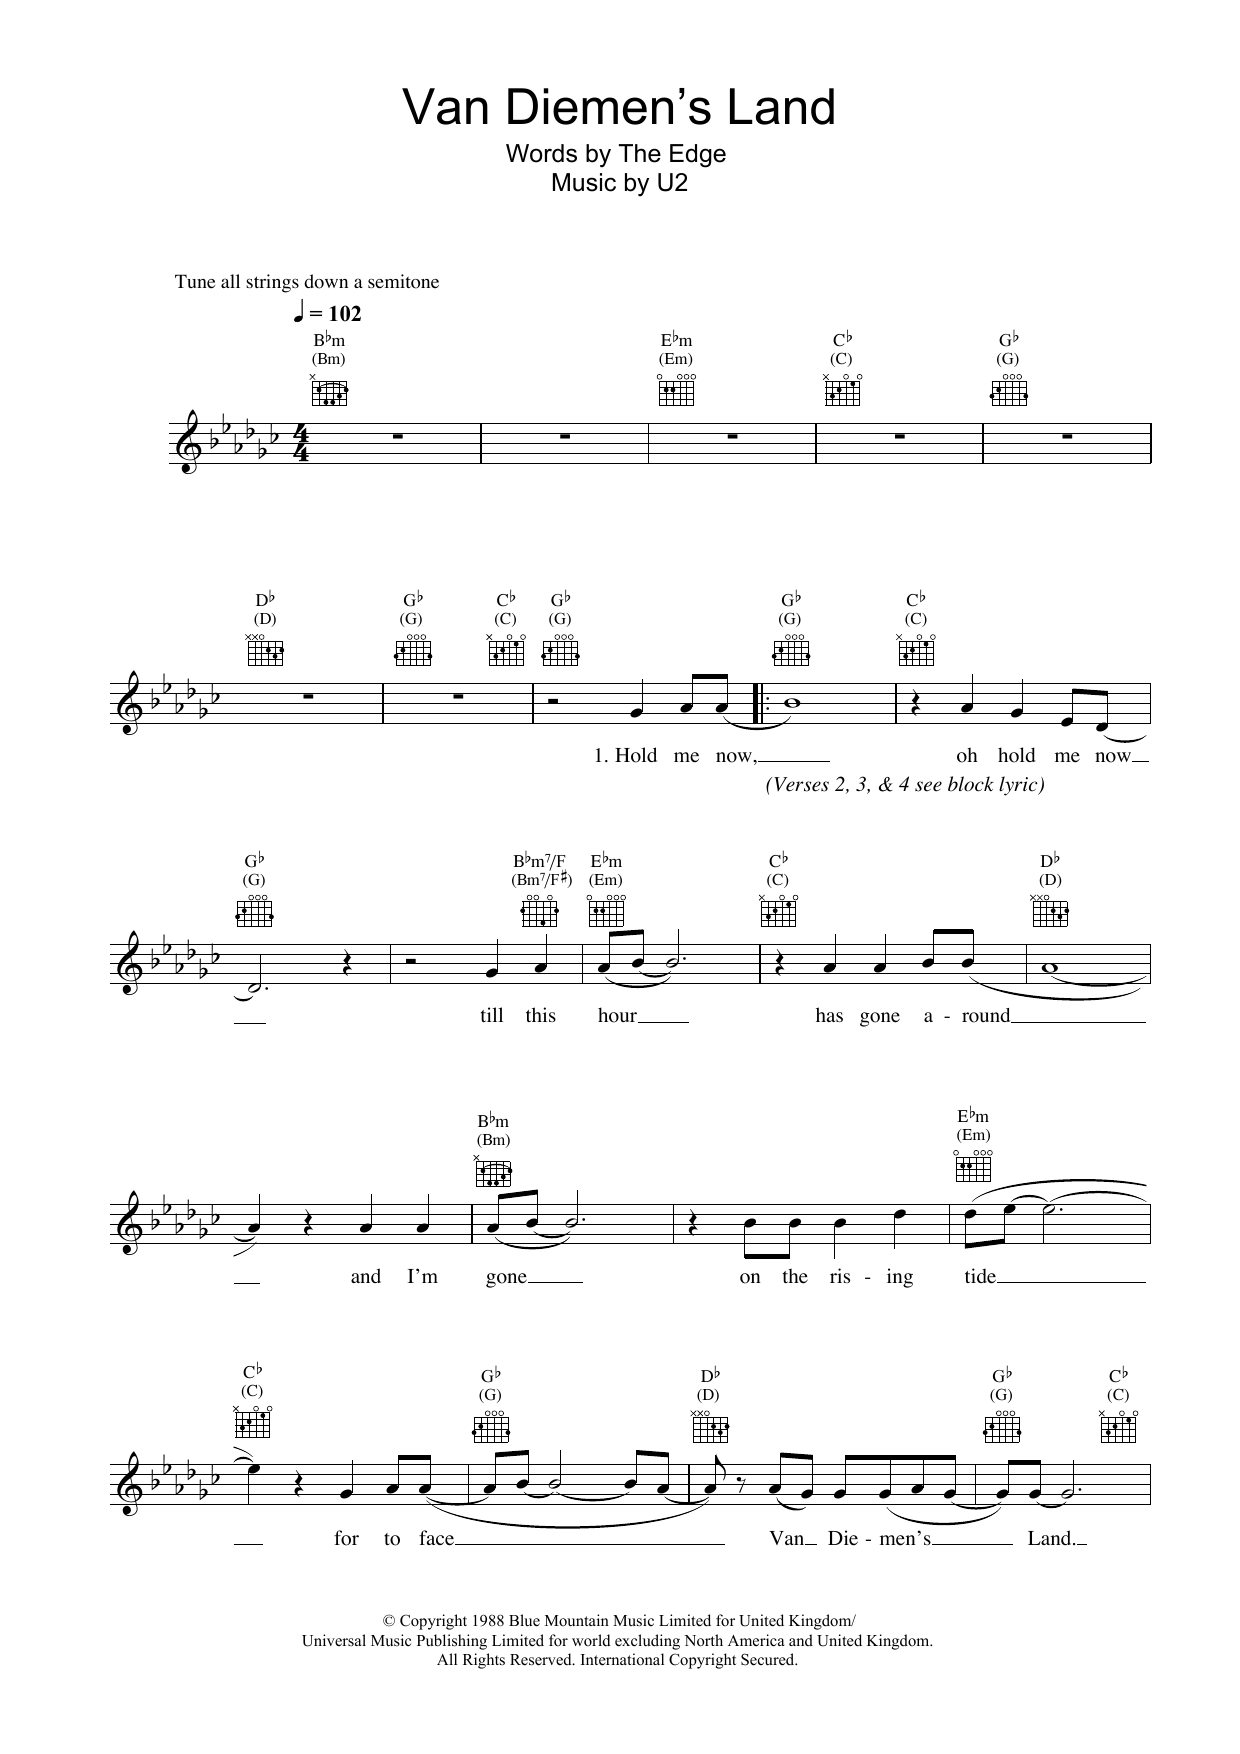 U2 Van Diemen's Land sheet music notes and chords arranged for Guitar Chords/Lyrics